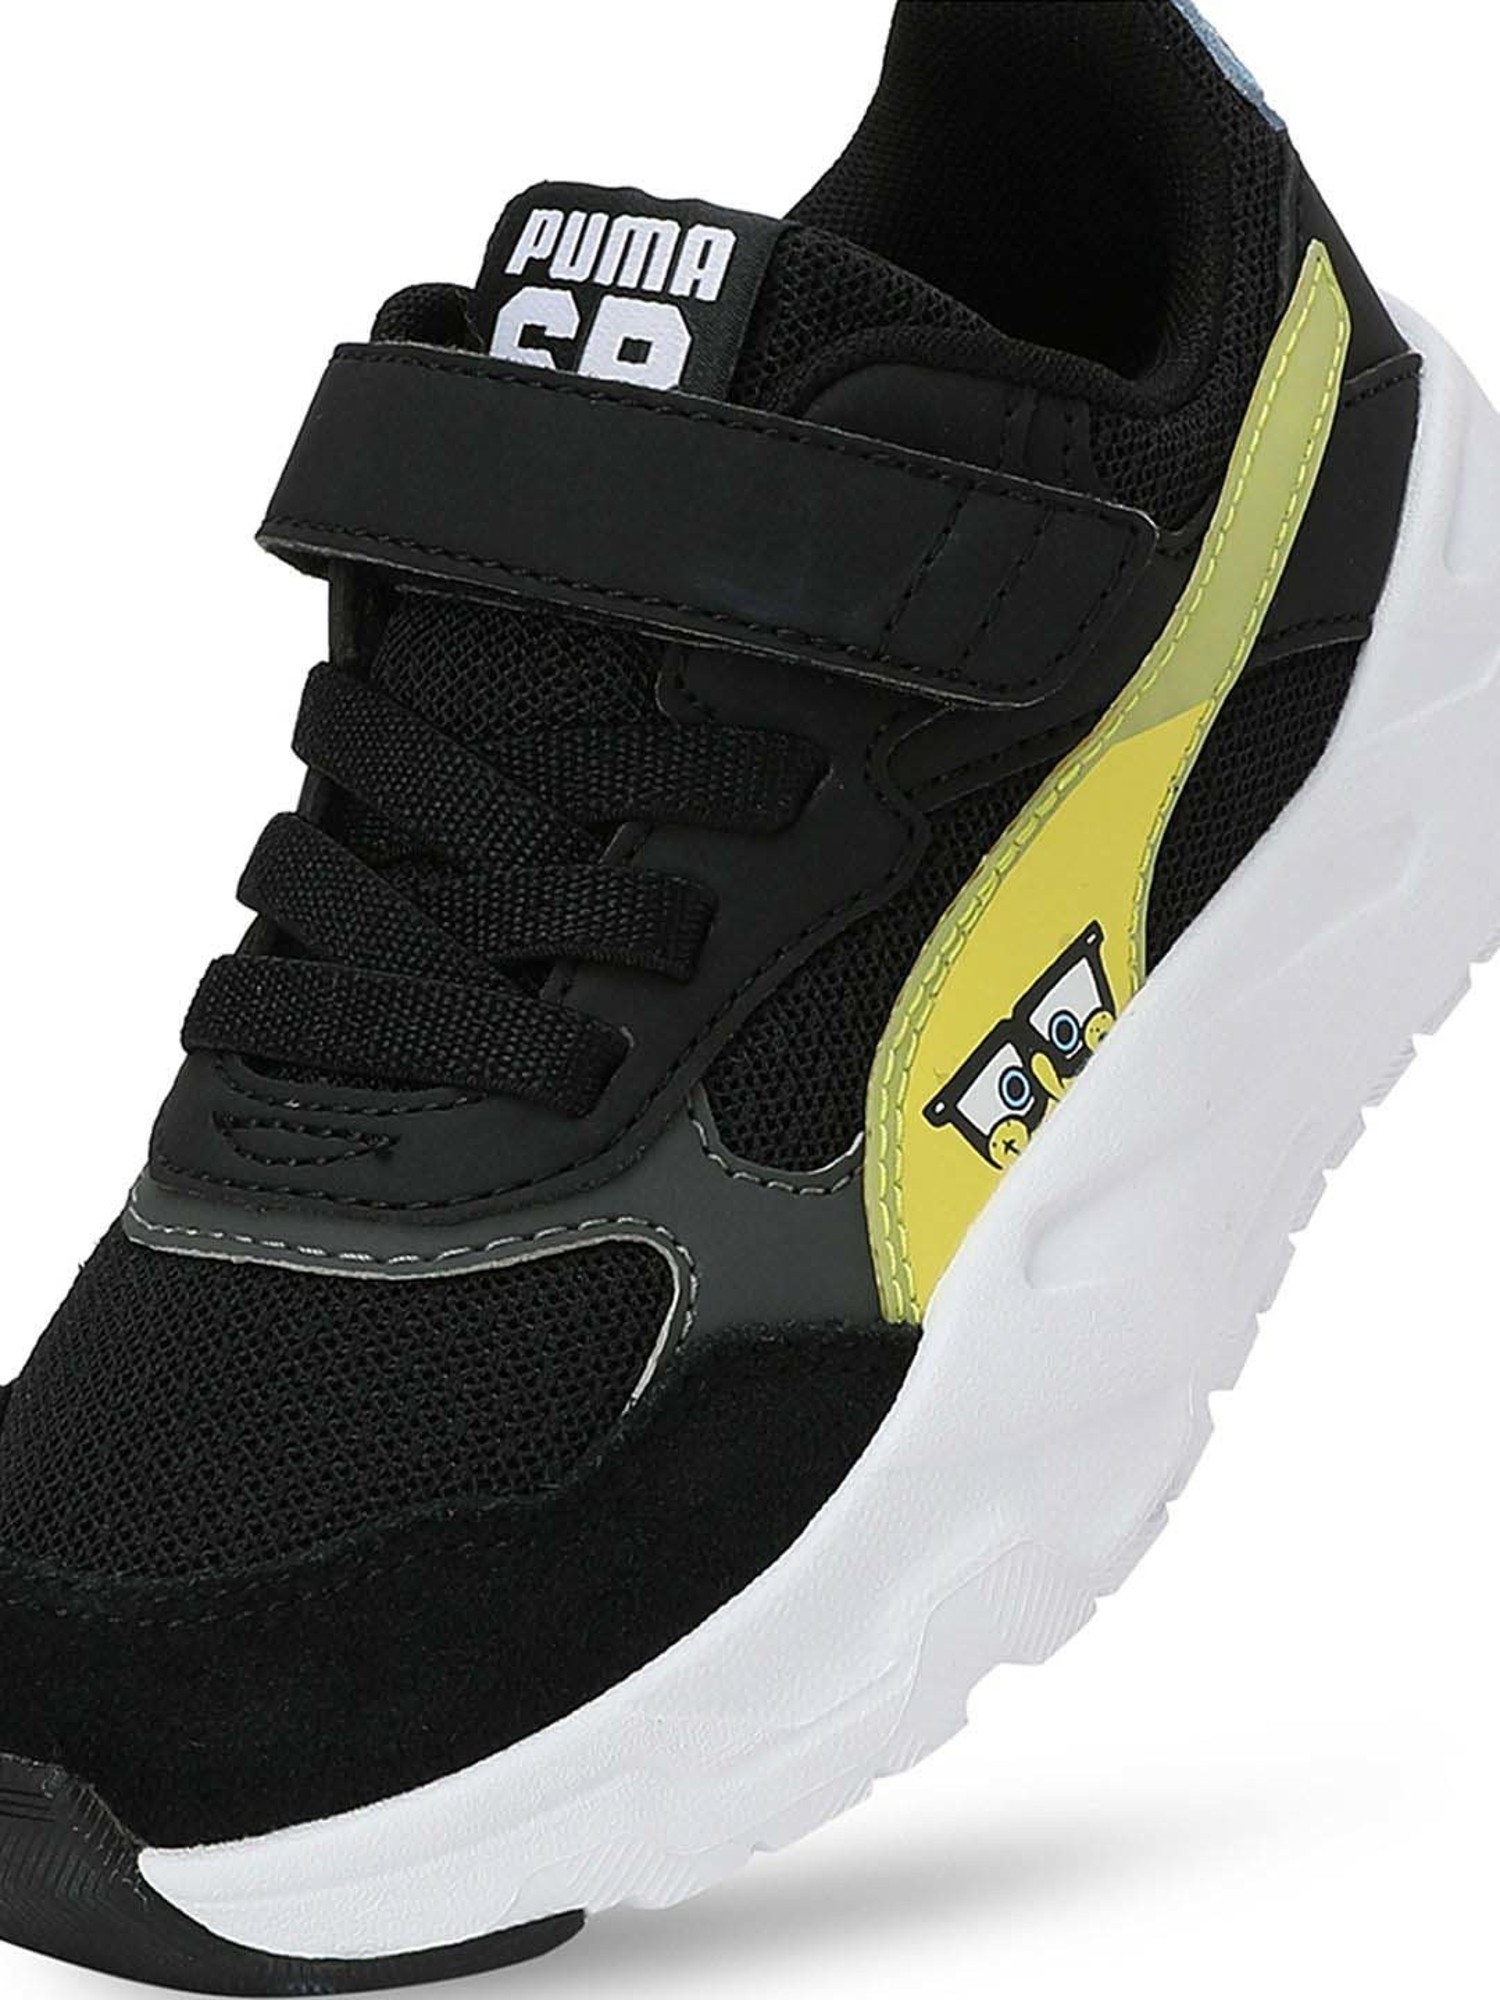 Trinity at Kids Black AC+ Puma Price Yellow CLiQ & PS Tata for Best Buy Casual Sneakers @ Spongebob